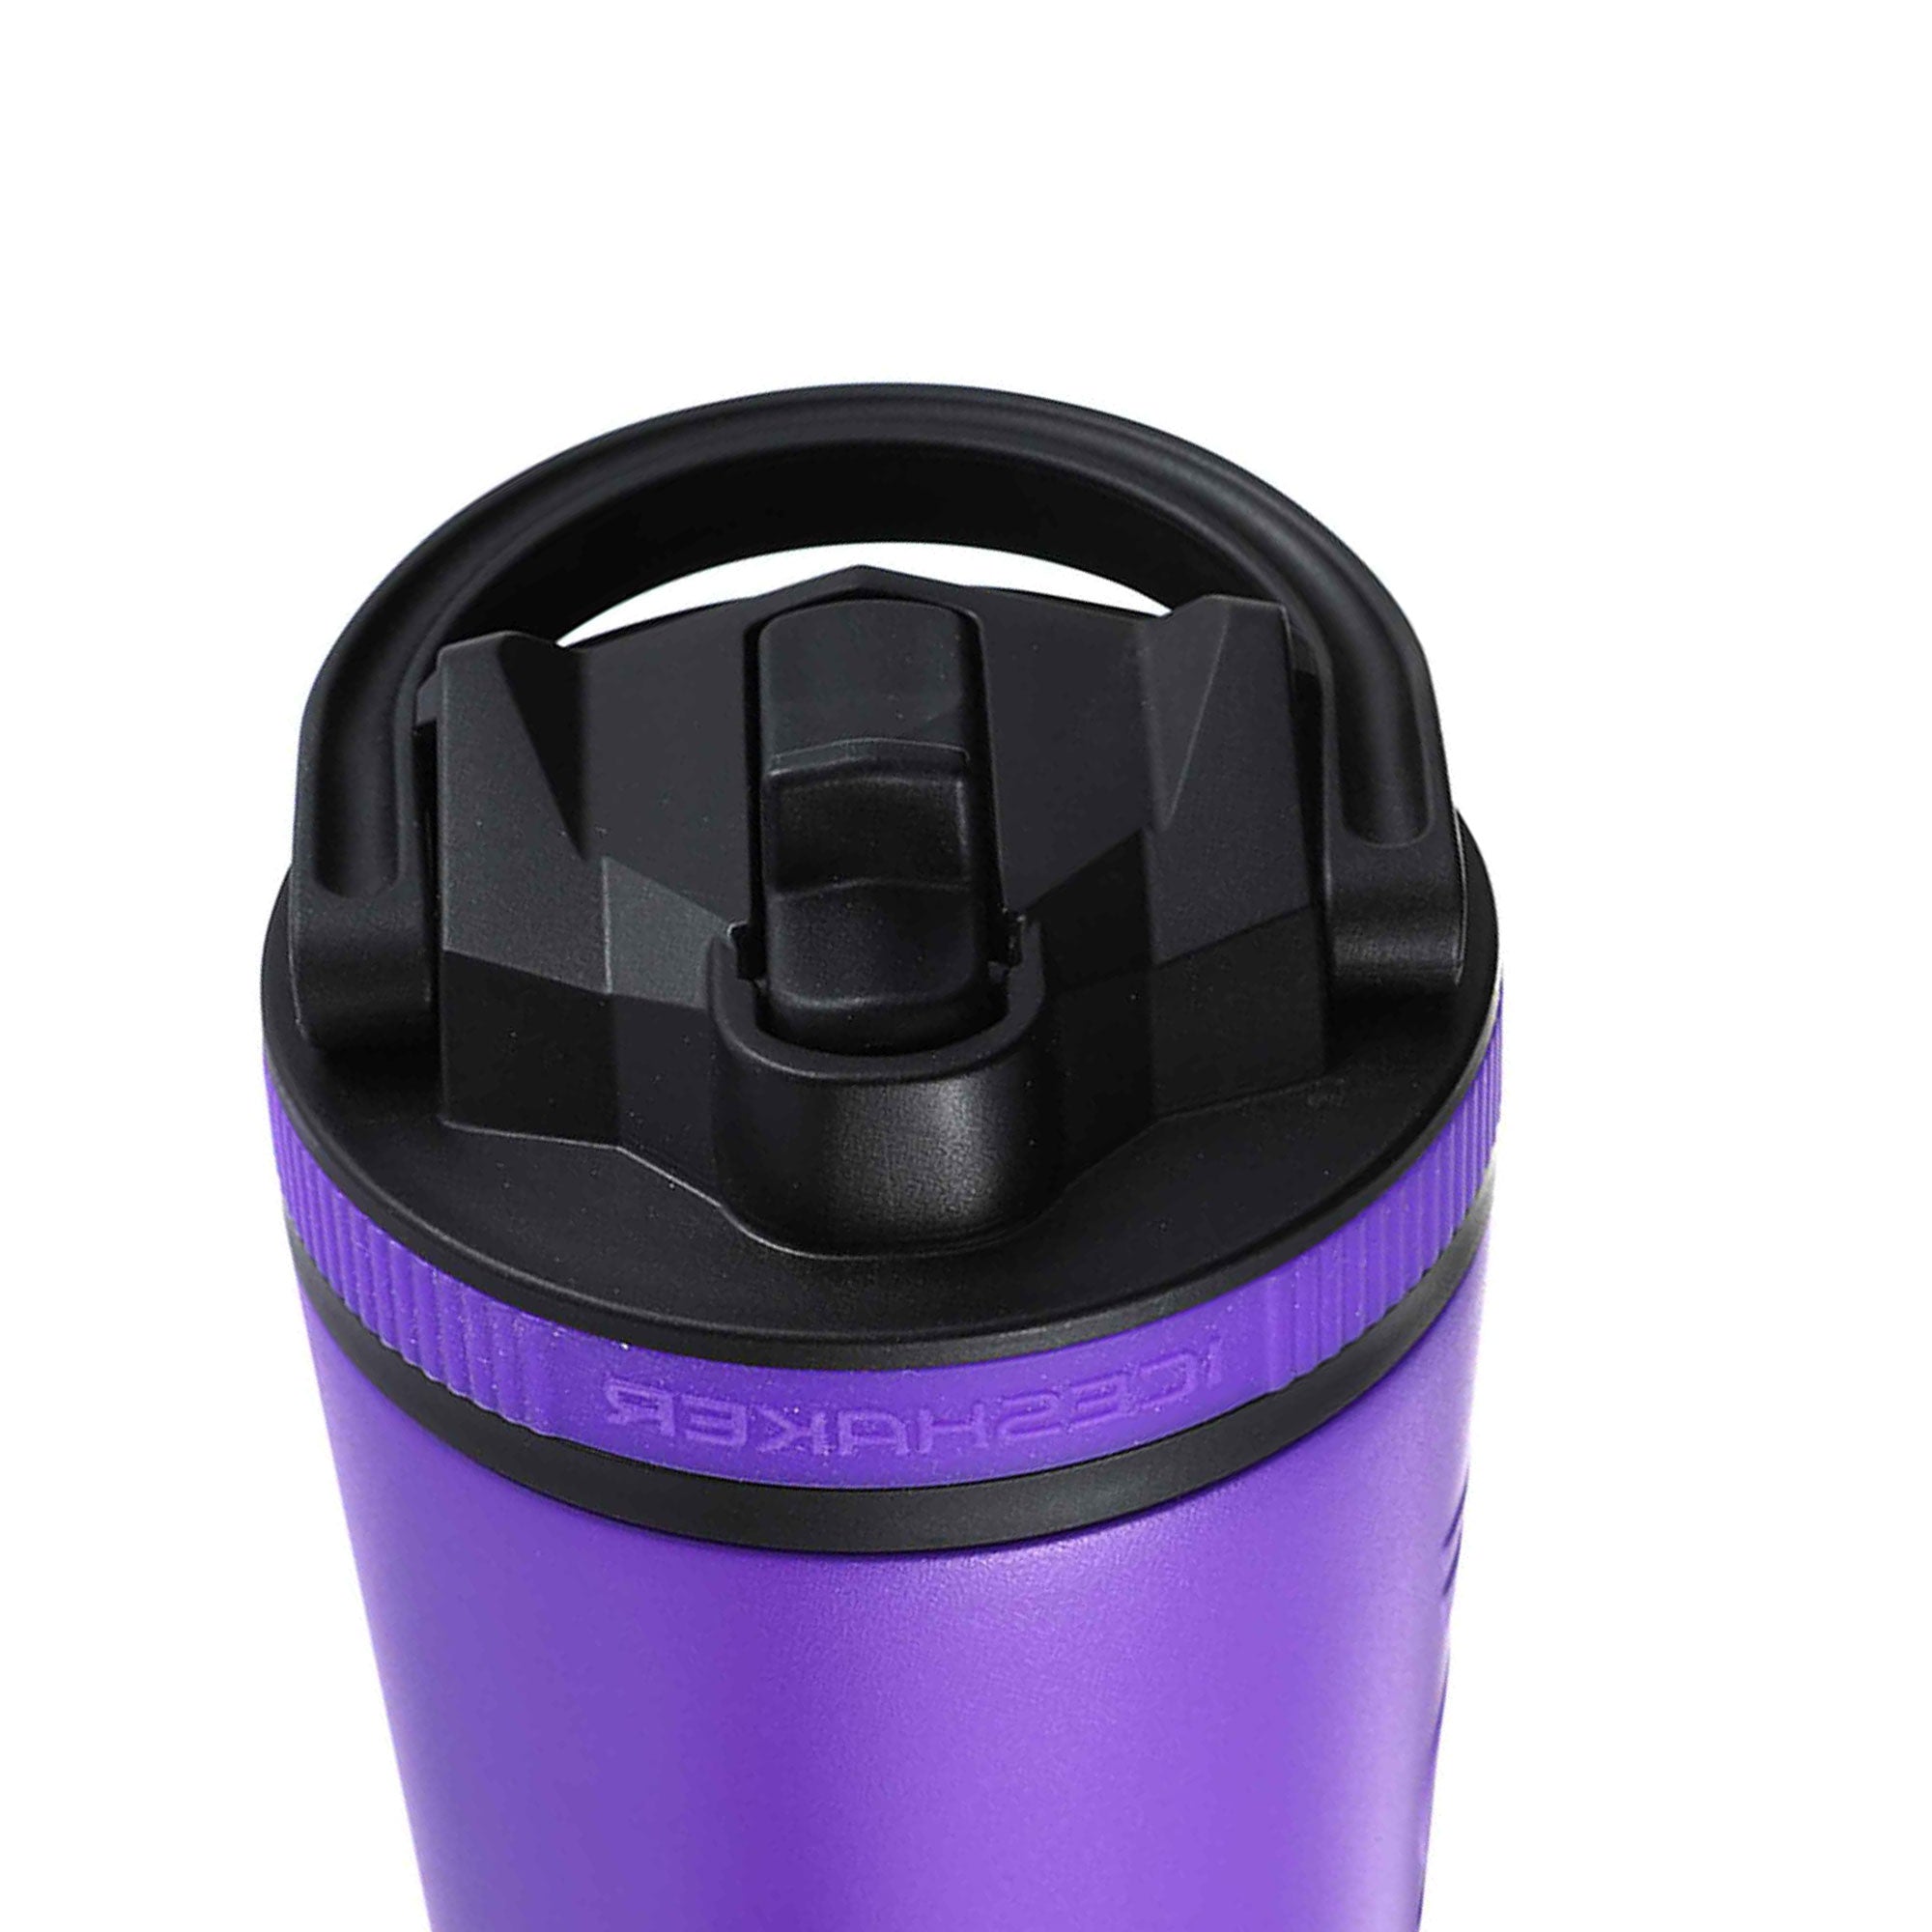 26oz Sport Bottle Lid & Internal Straw - Black Lid with Purple Band